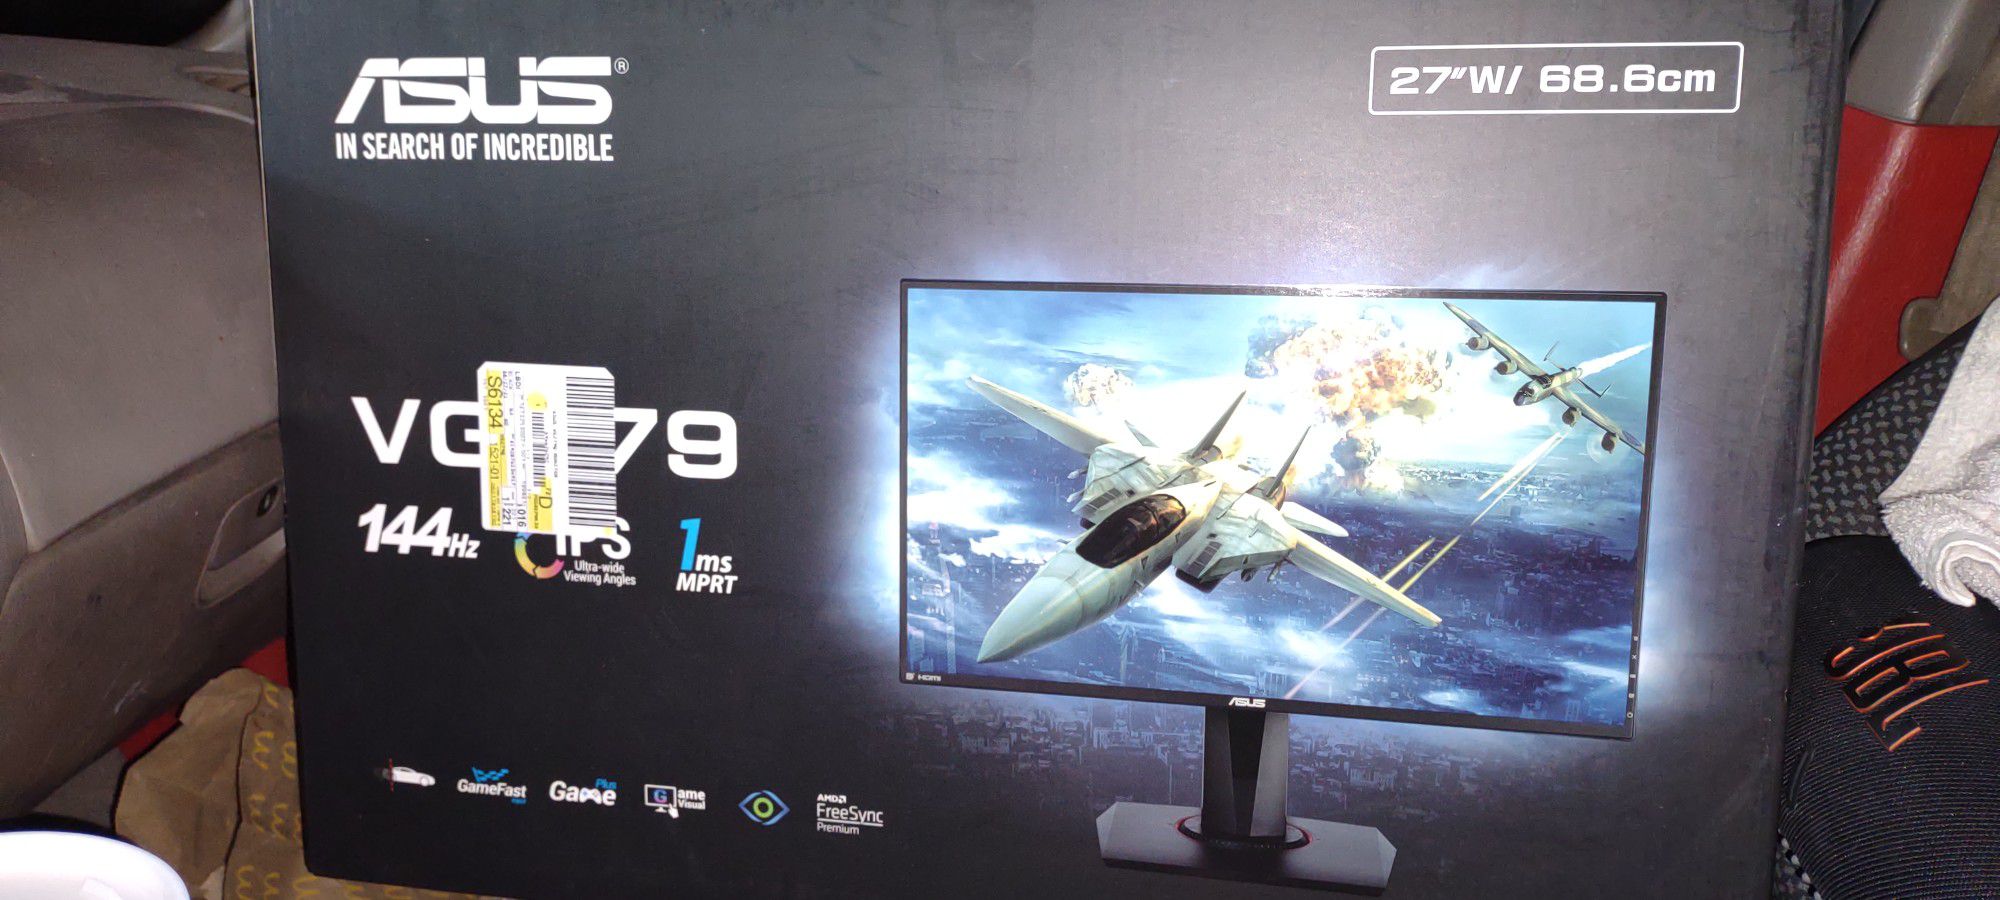 Asus VG 279 27-in Gaming Monitor 